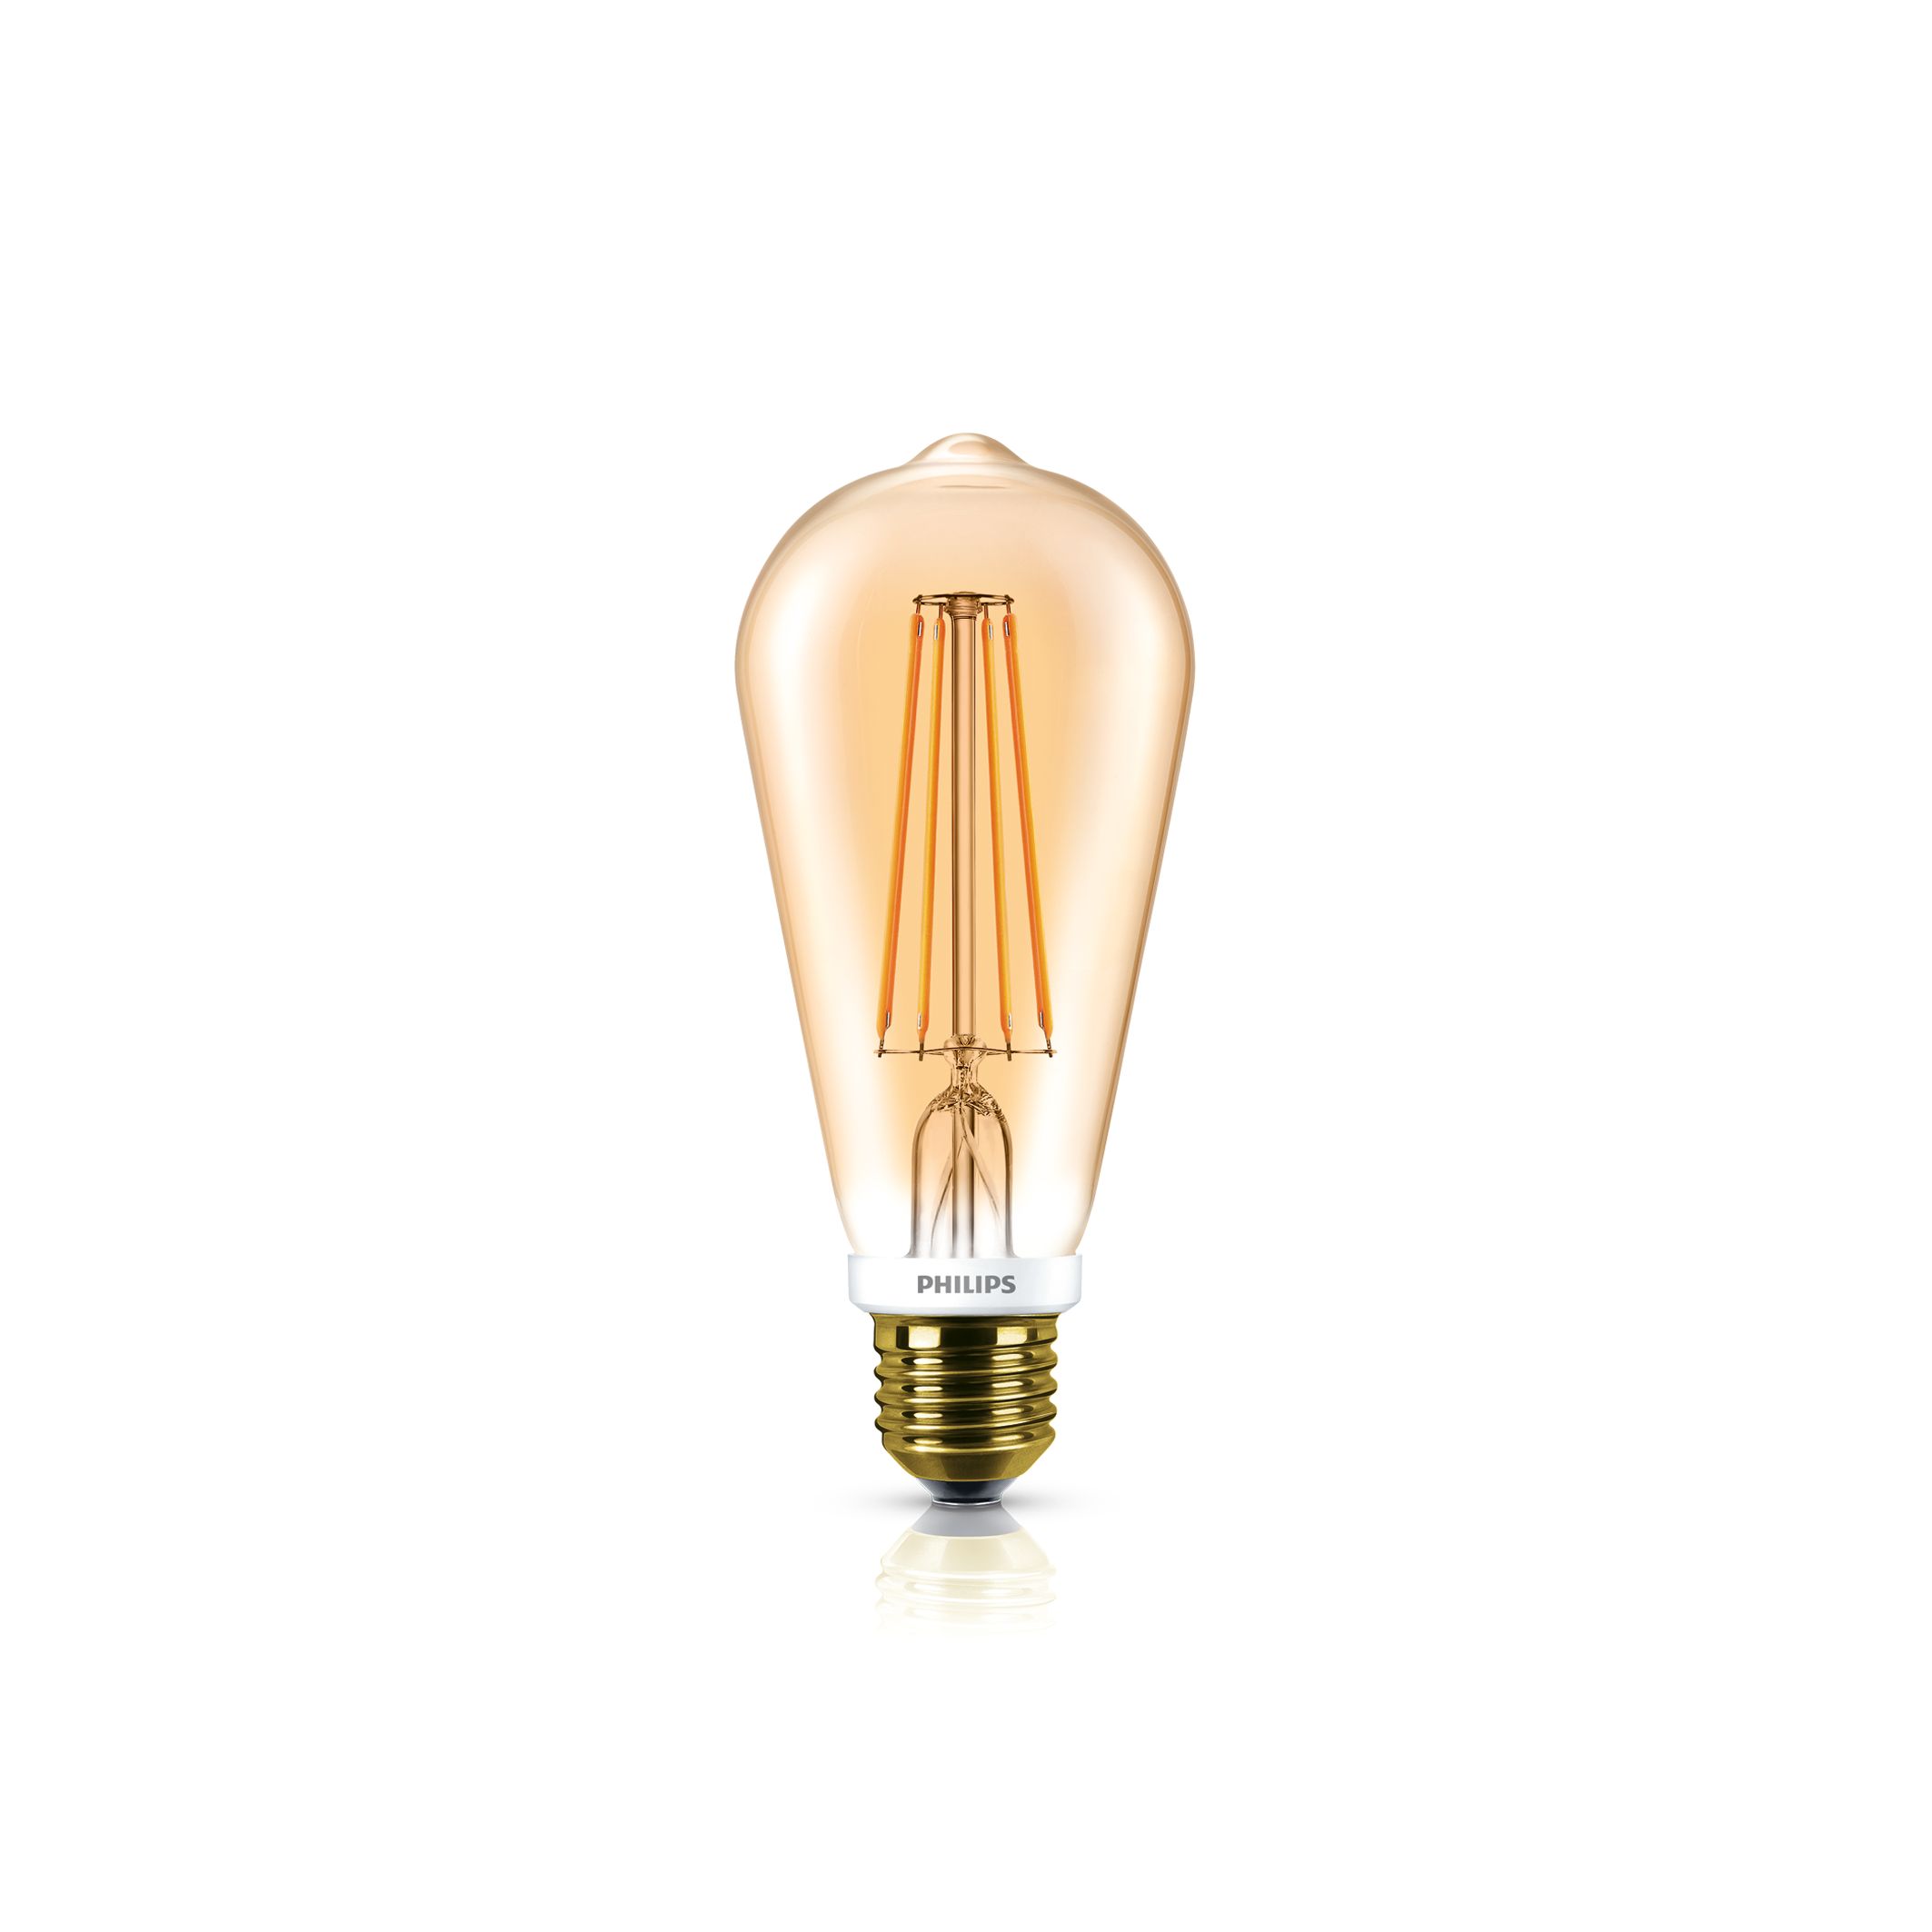 Rechtdoor Lucky mengsel Premium LED bulbs Vintage Filament | 6981535 | Philips lighting